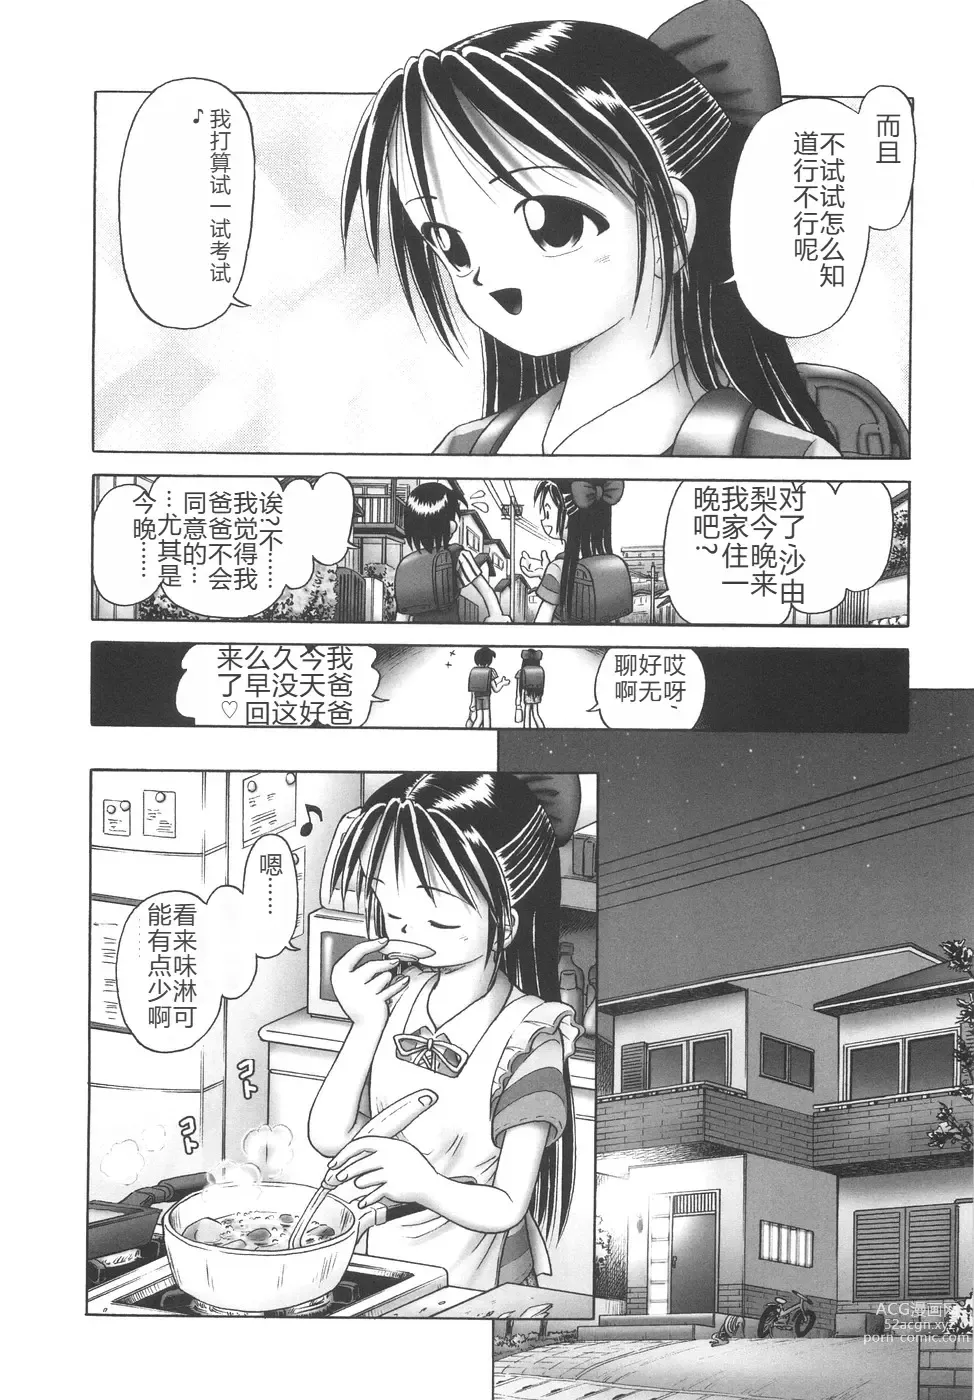 Page 12 of manga Hitoribocchi no Orusuban